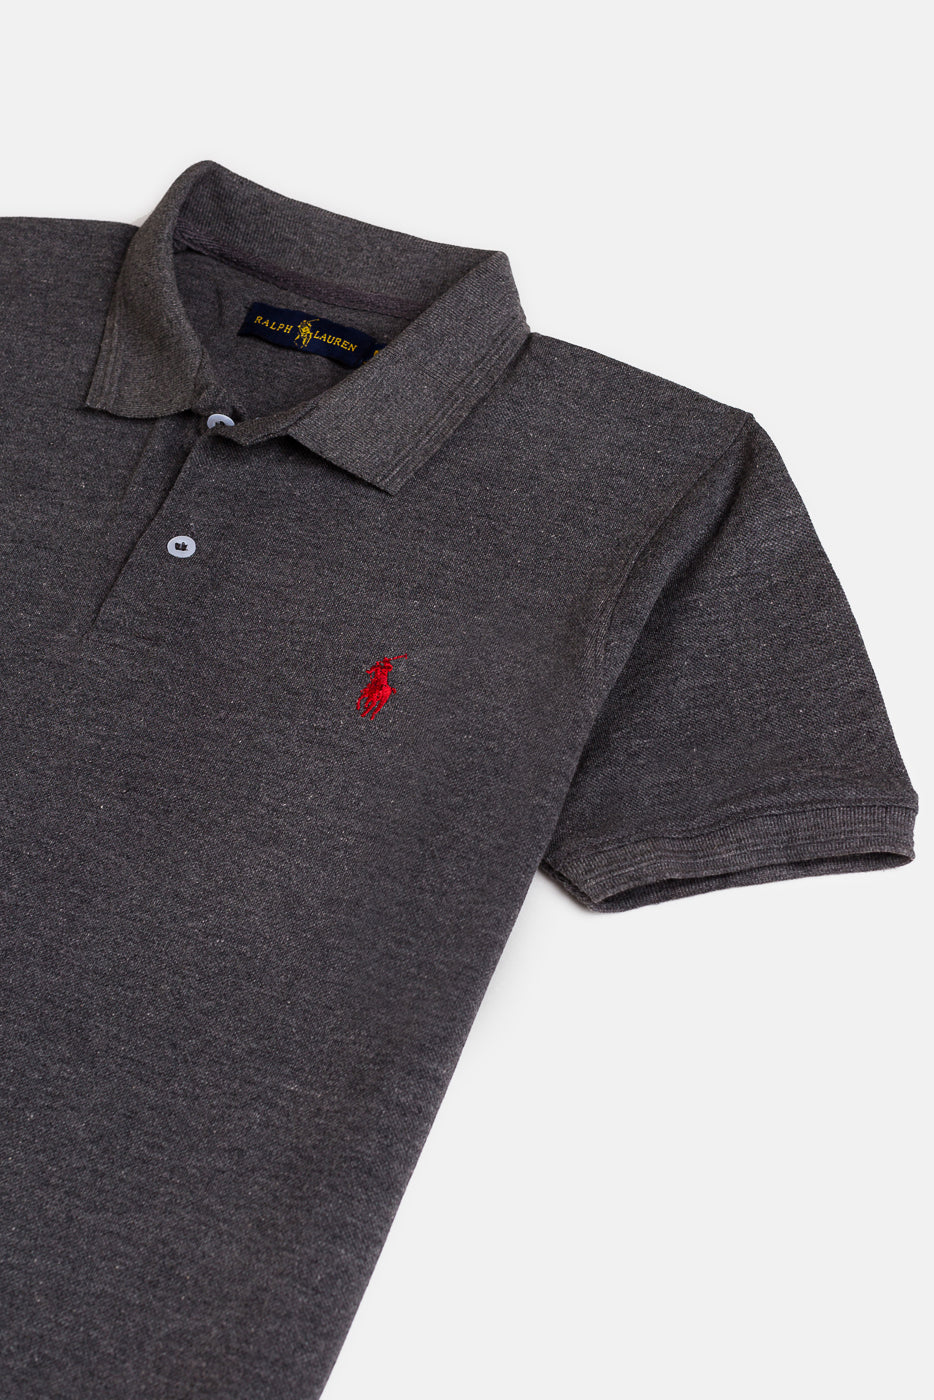 RL Premium Imported Polo Shirt - Charcoal